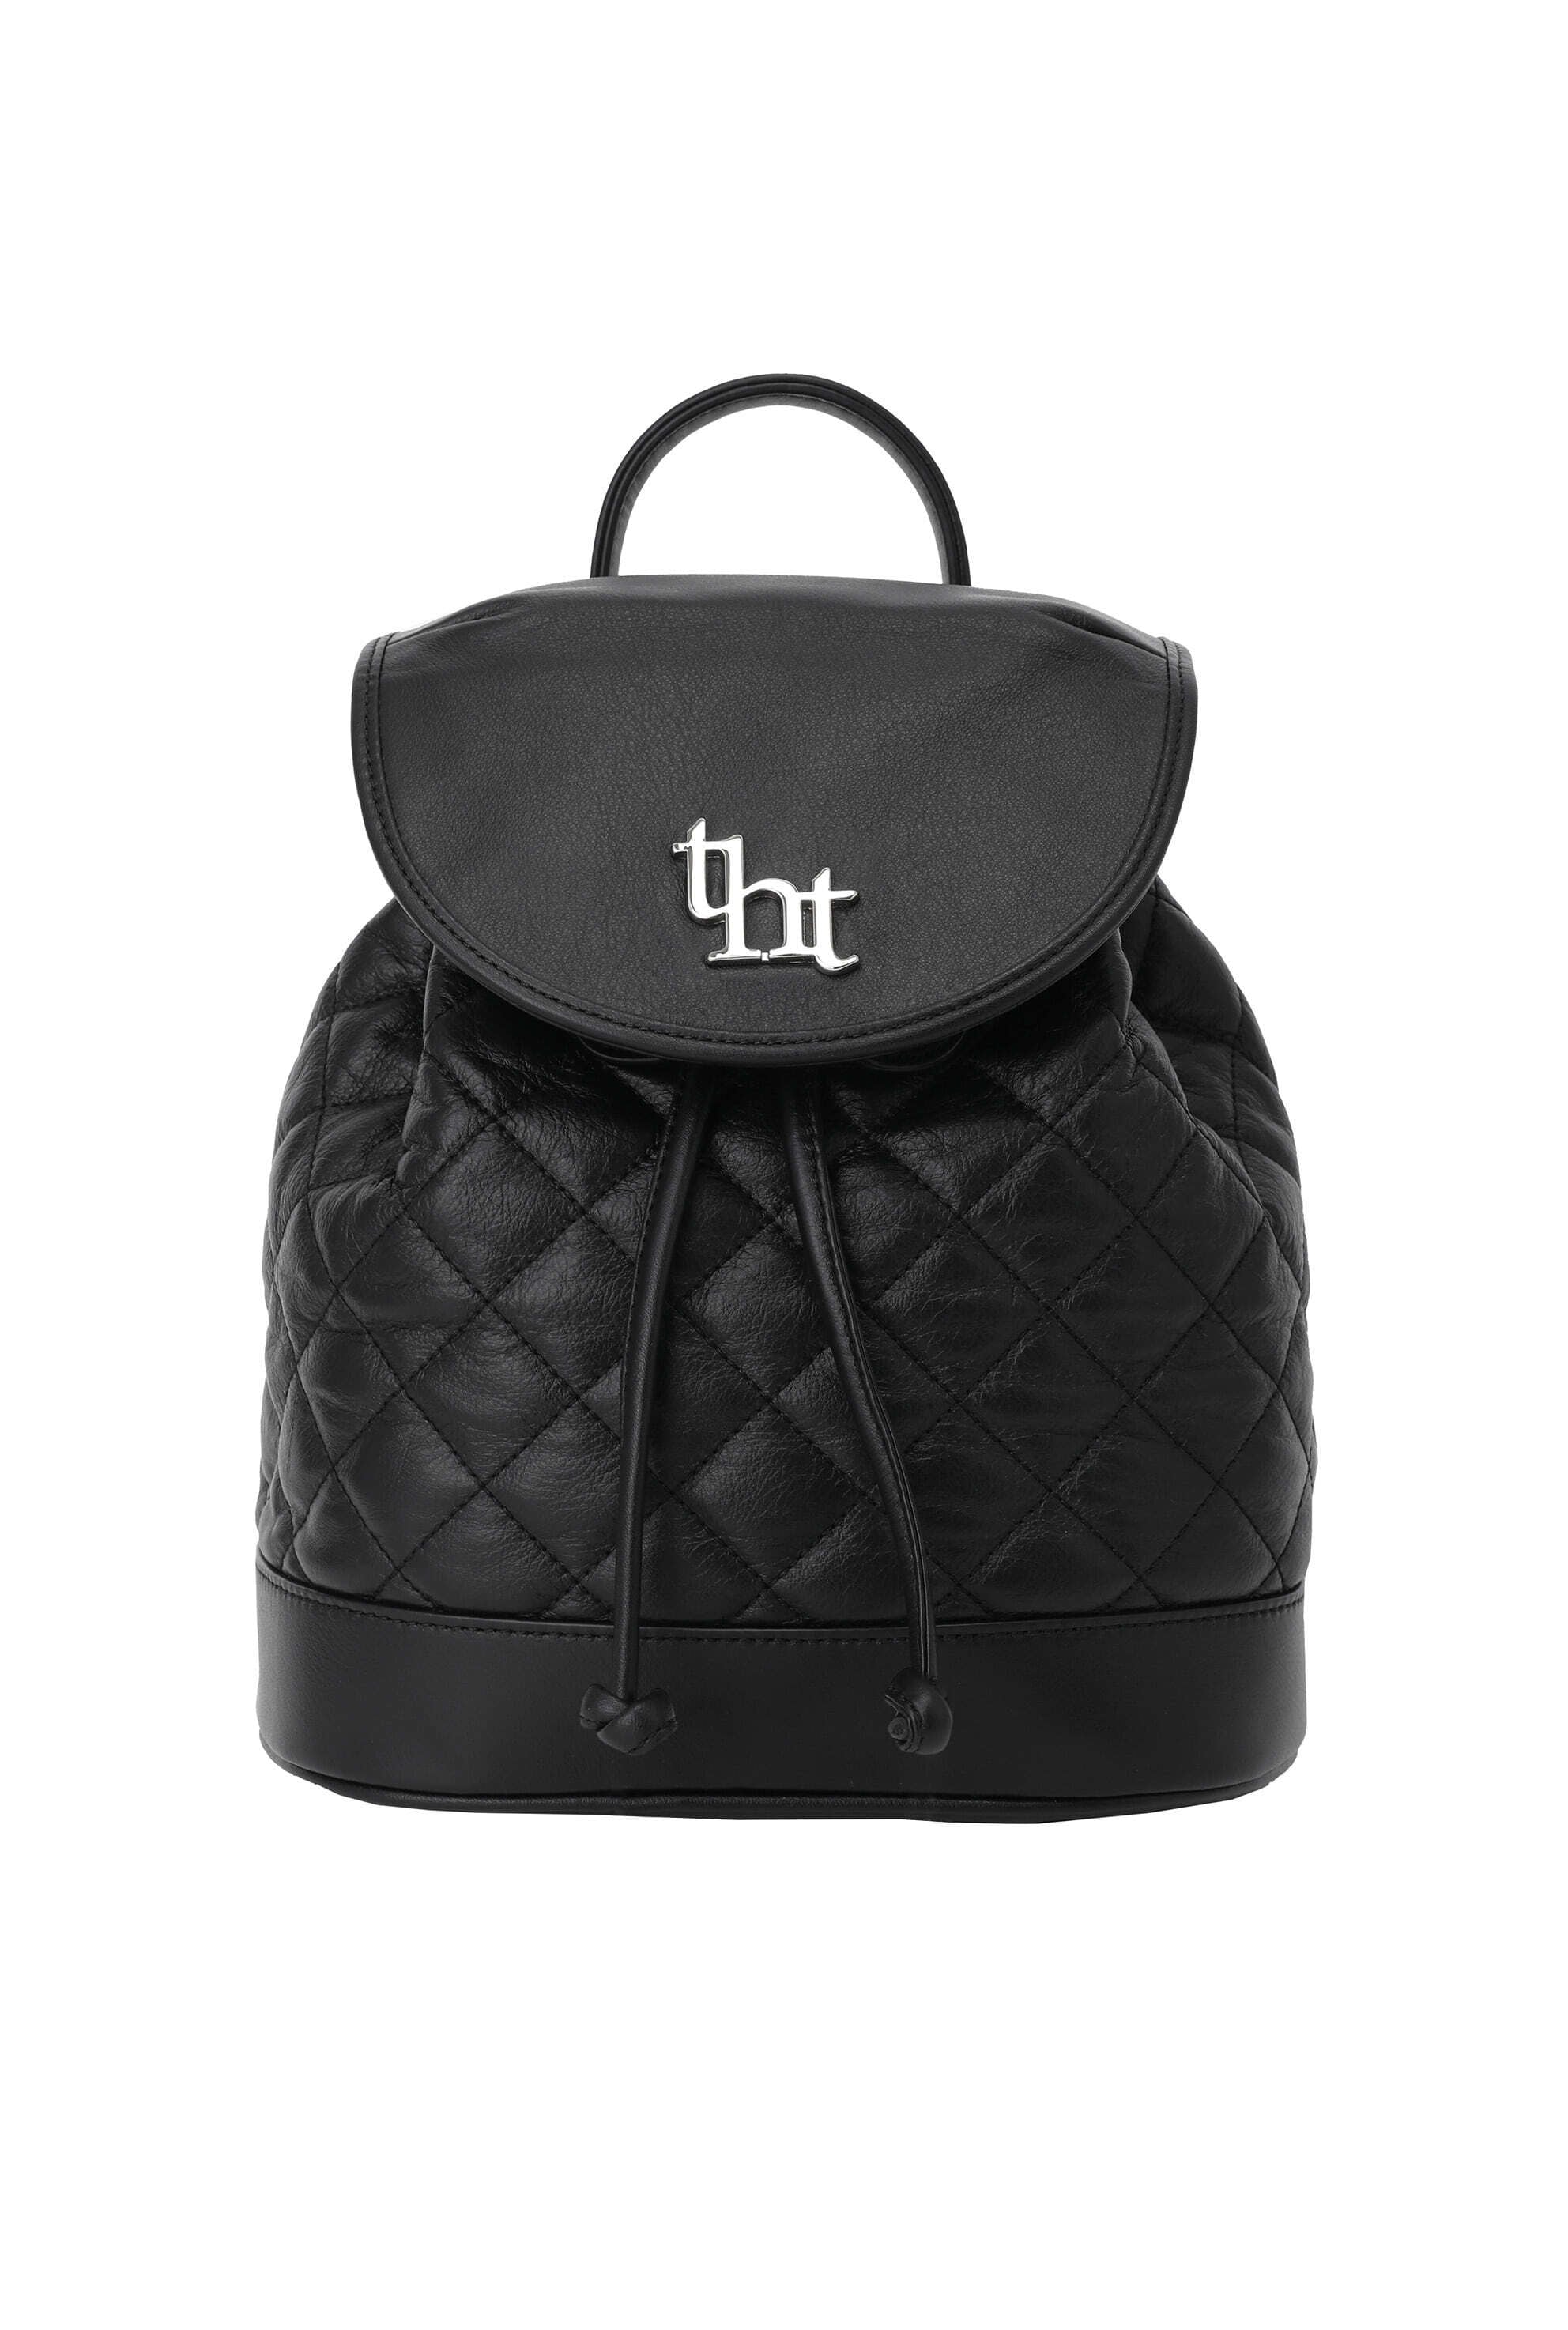 [threetimes] Acorn quilted backpack black 正規品 韓国ブランド 韓国通販 韓国代行 韓国ファッション  スリータイムズ | BONZ (韓国ブランド 代行) powered by BASE